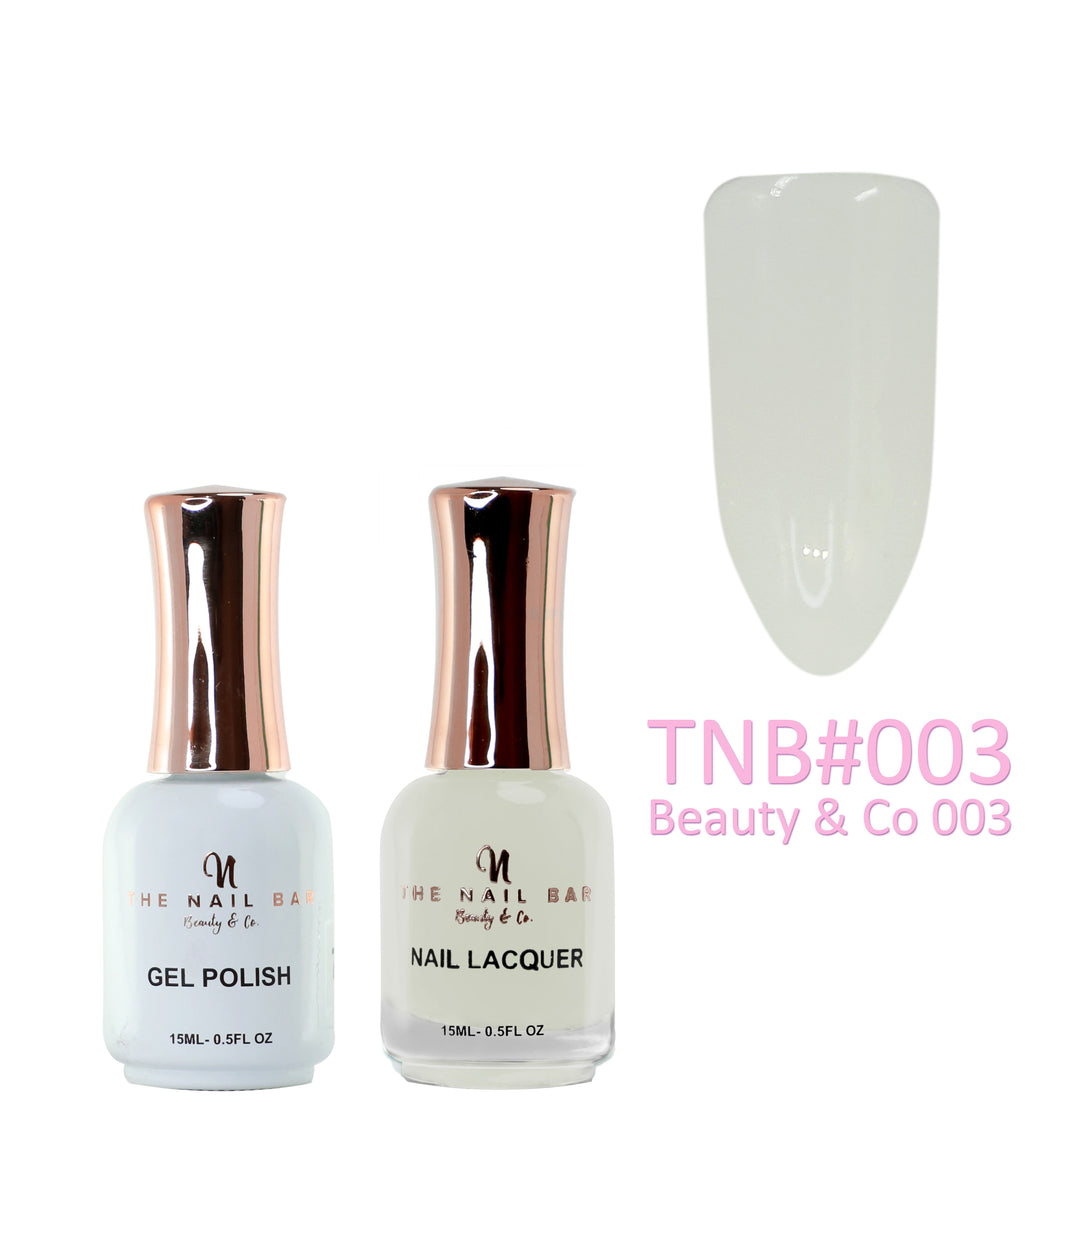 Dual Polish/Gel colour matching (15ml) -  Beauty & Co 003 - The Nail Bar Beauty & Co.